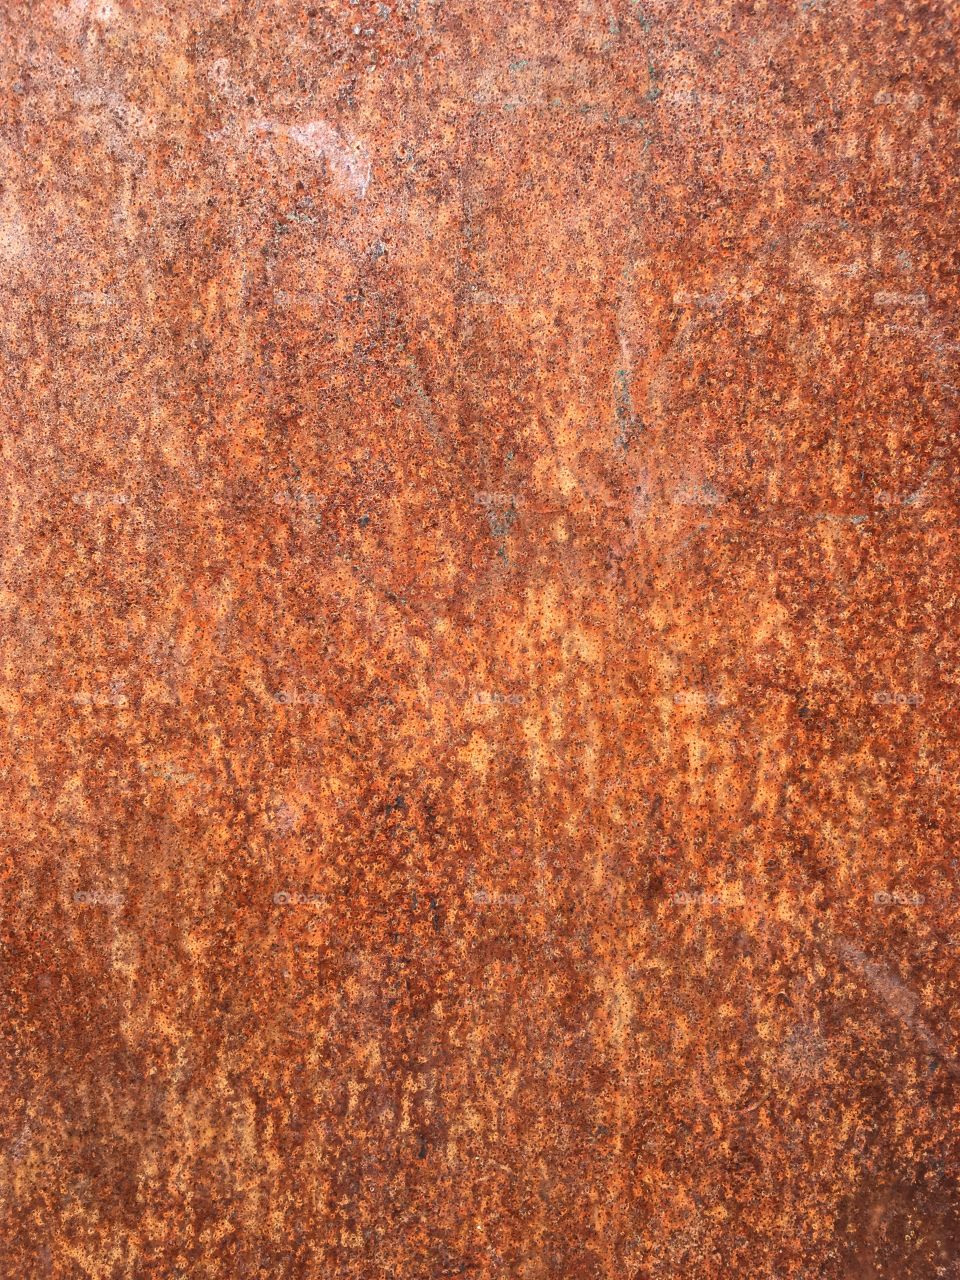 Background of rusty metallic sheet